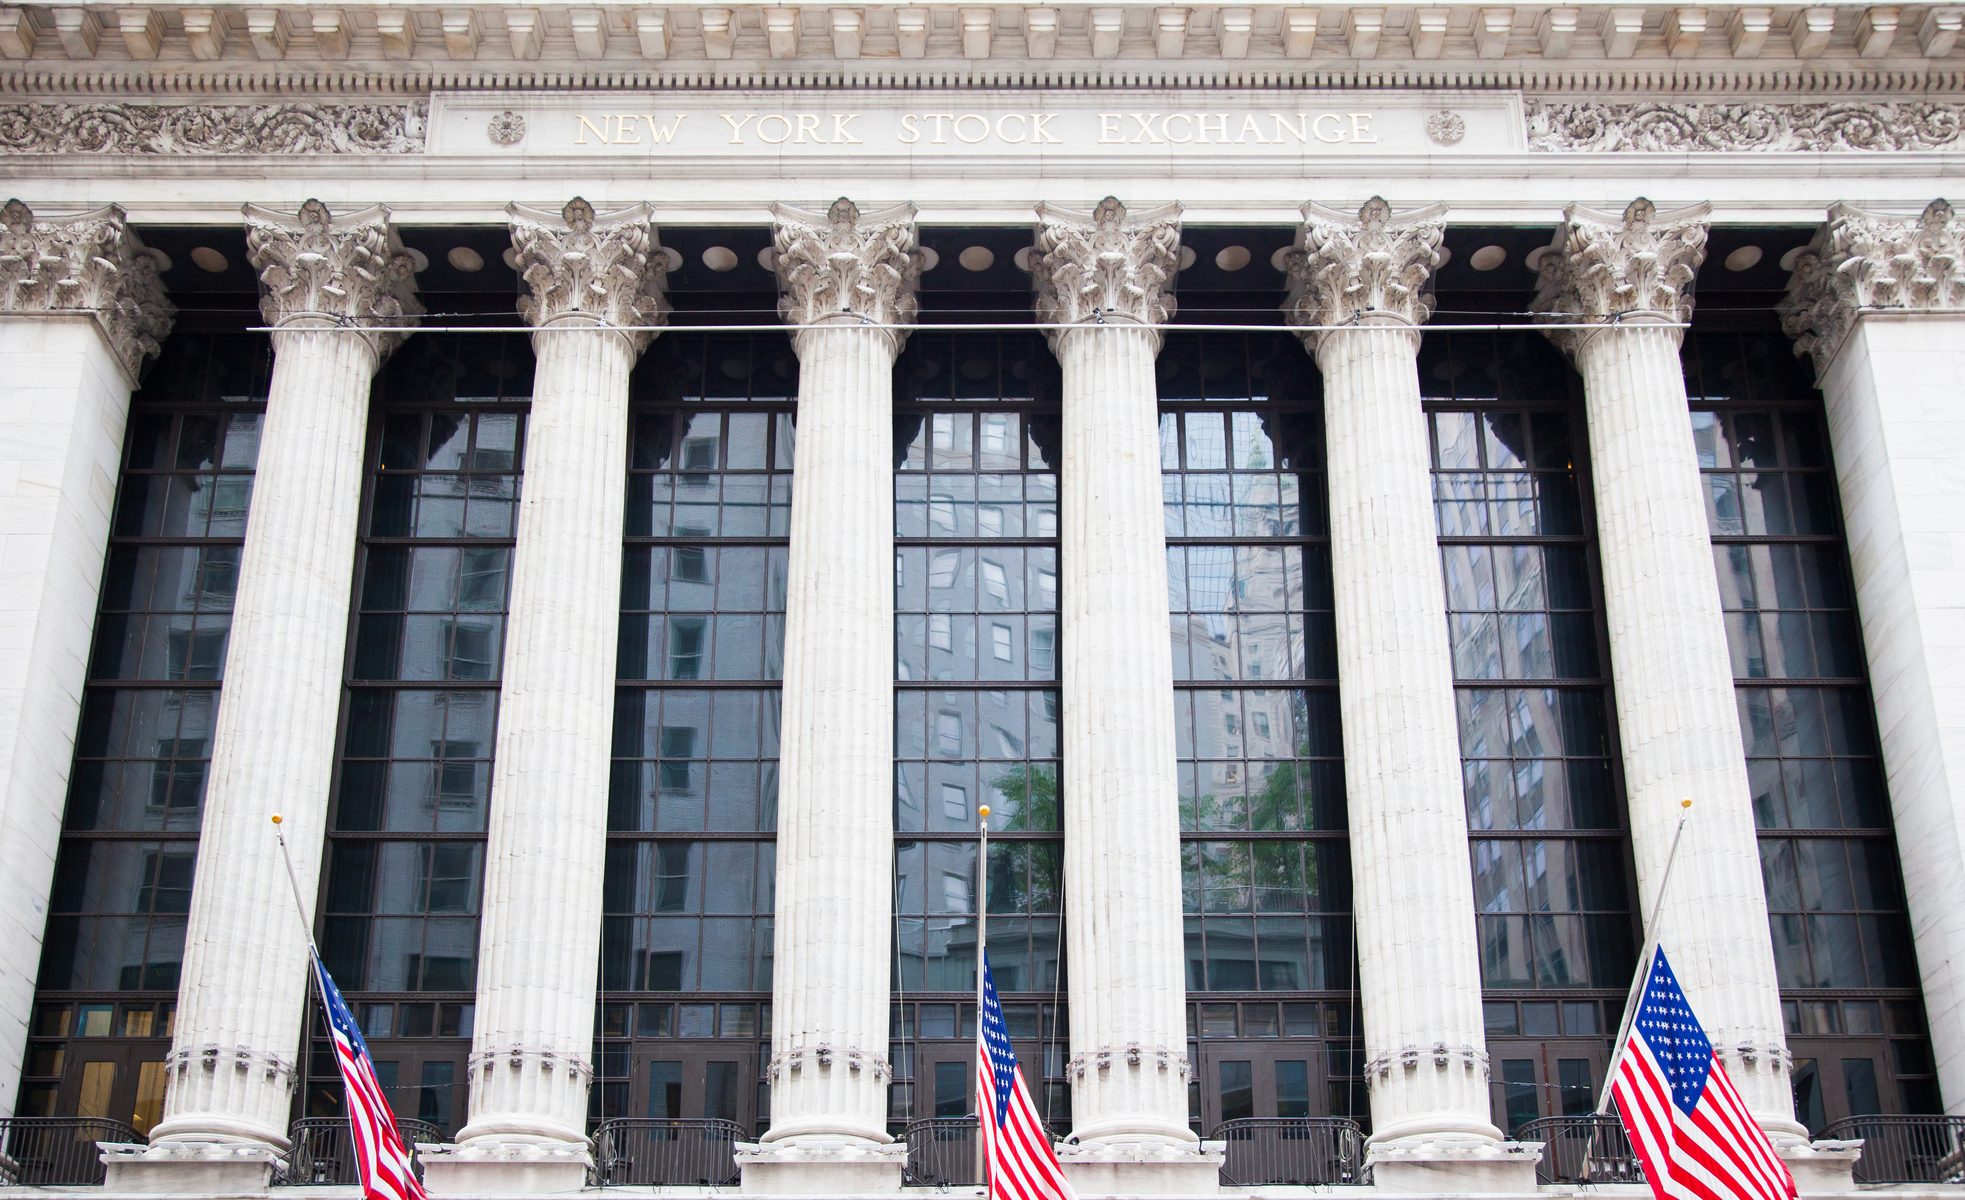 New York City Stock exchange on Wall Street